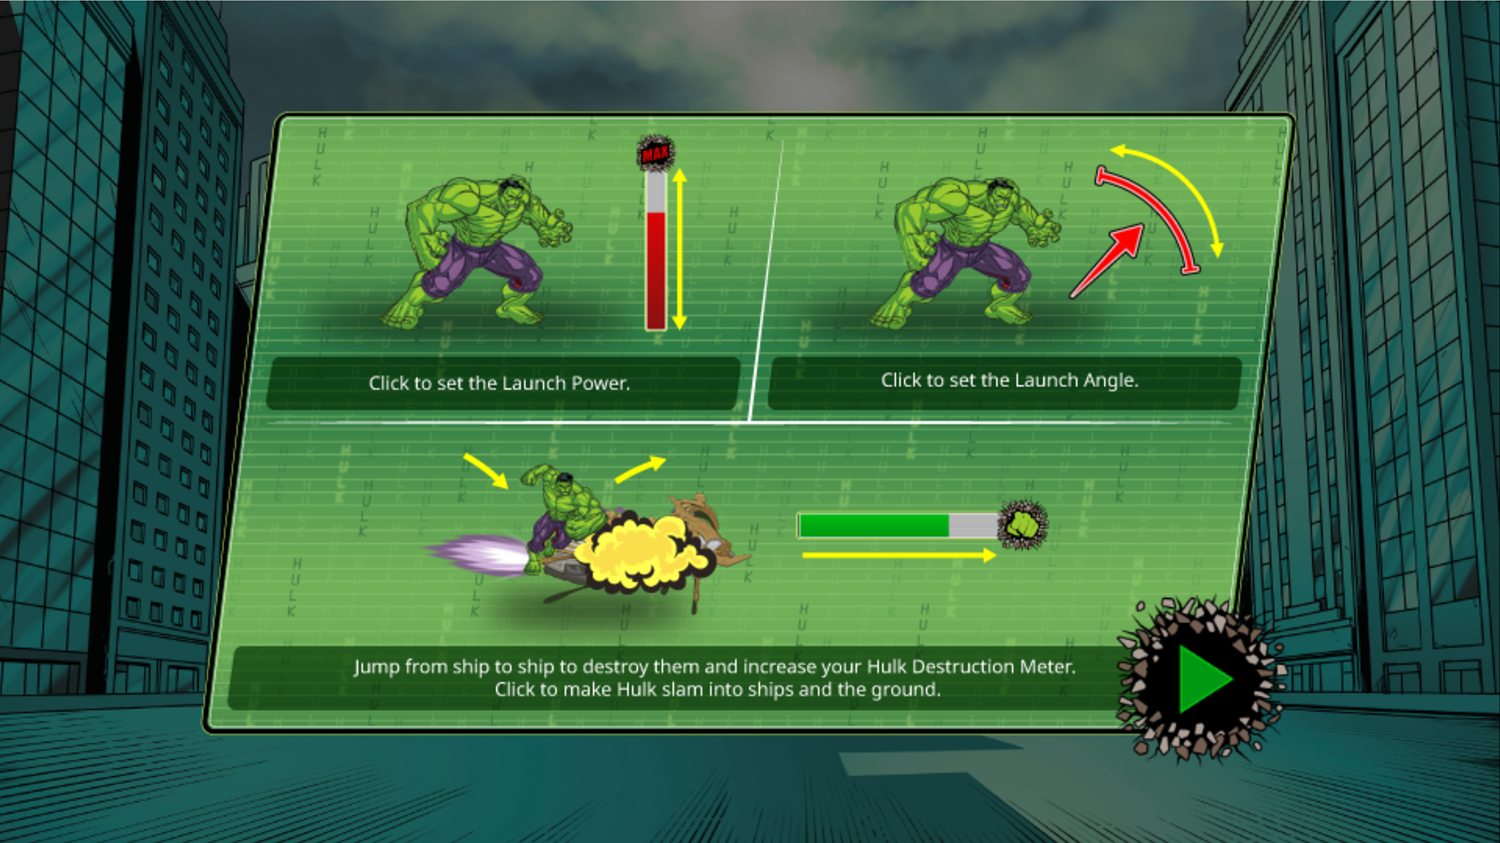 Incredible Hulk Chitauri Takedown Game Instructions Screen Screenshot.